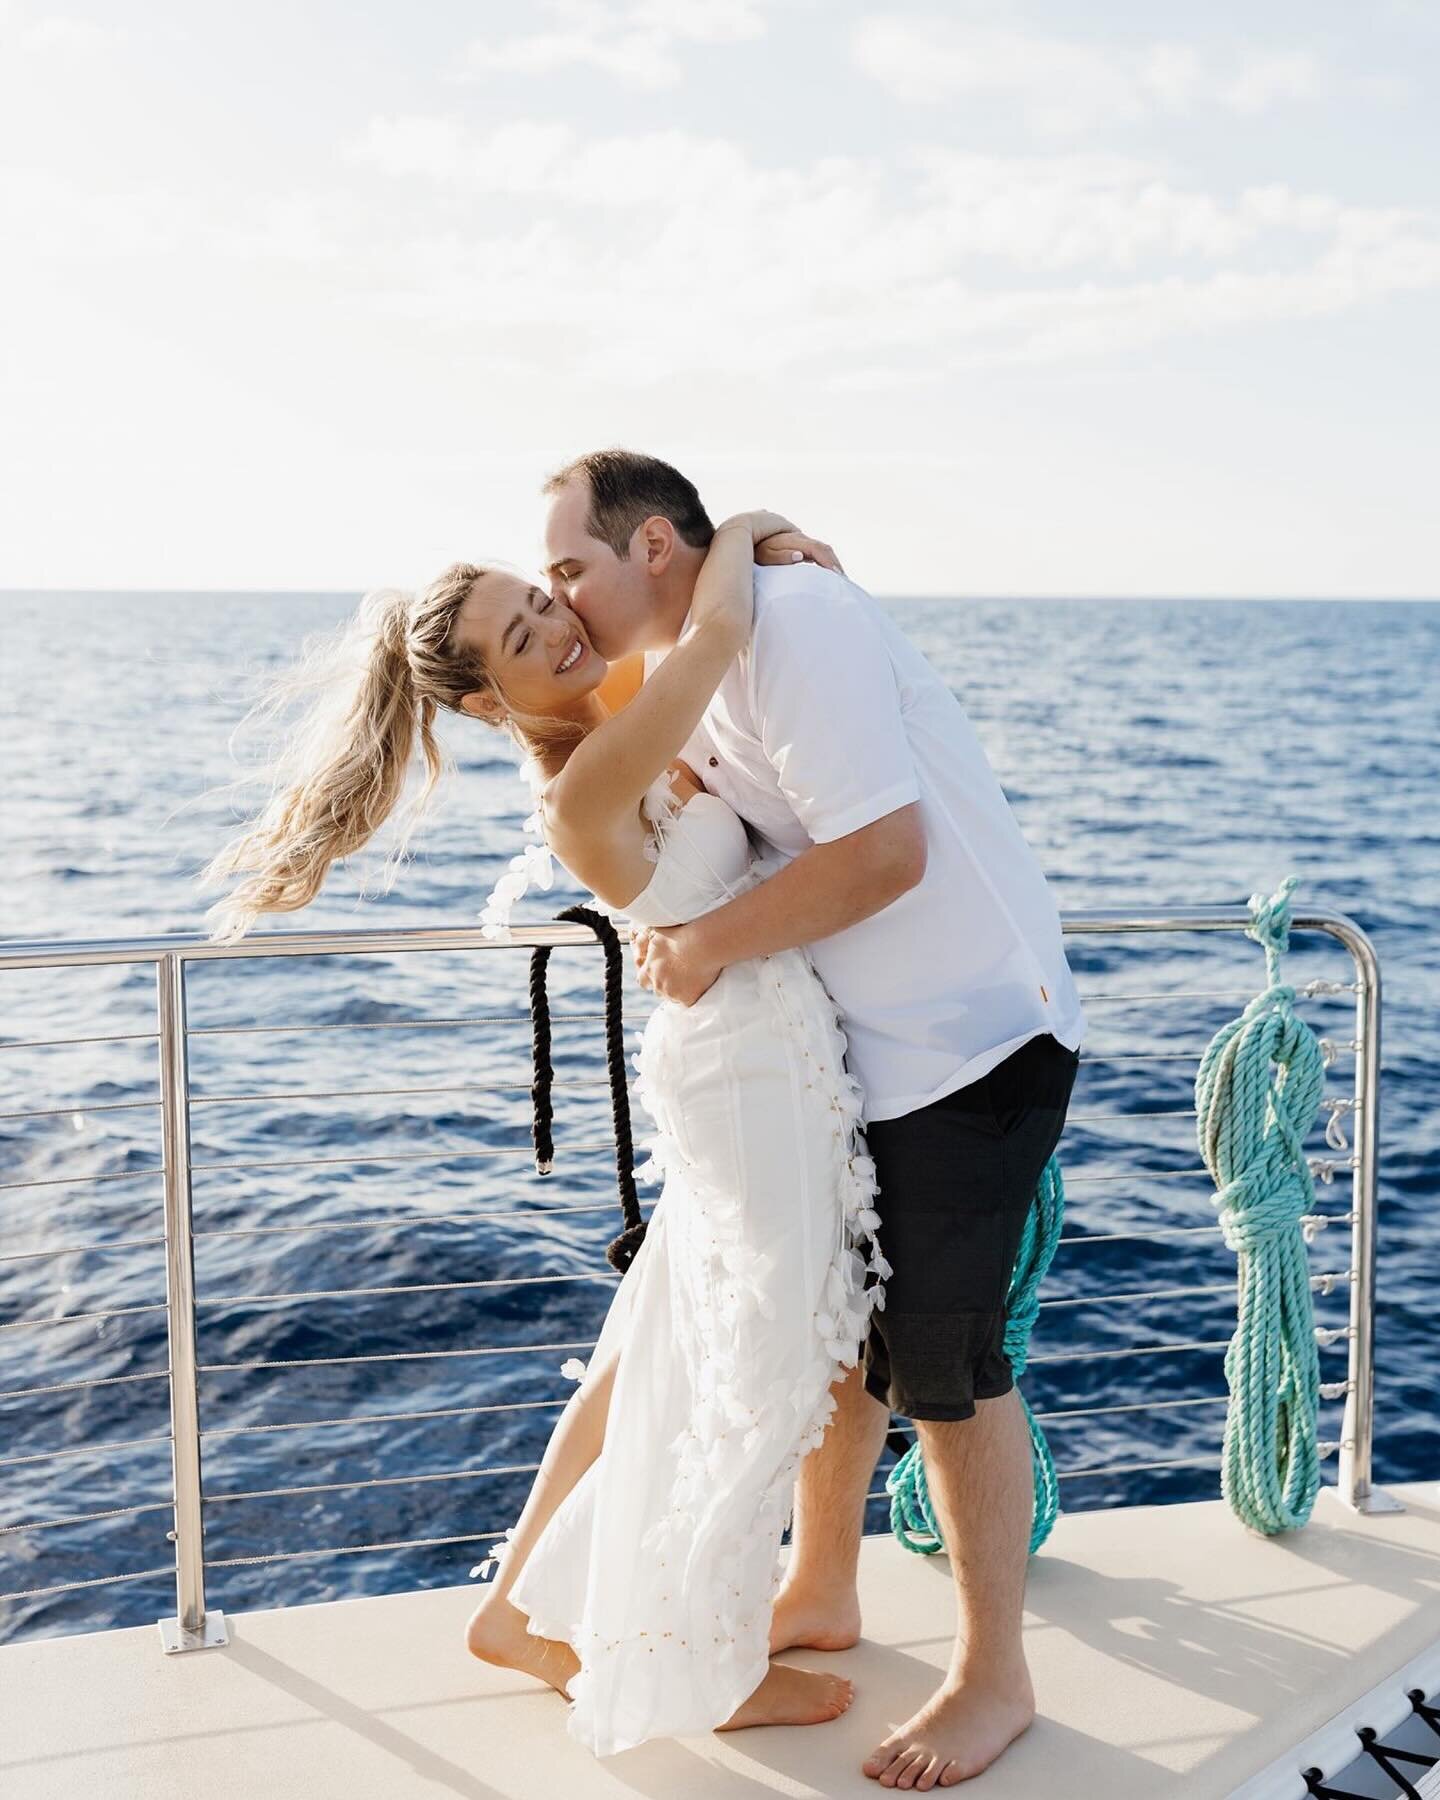 Love at sea 🌊 ⚓️
.
.
.
.
.
#alaskaweddingphotographer #hawaiiweddingphotographer #hawaii #alaskaproposal #konaweddingphotographer #wedding #weddingvenue #weddingphotographer #elopement #elopementphotographer #destinationwedding #destinationweddingph